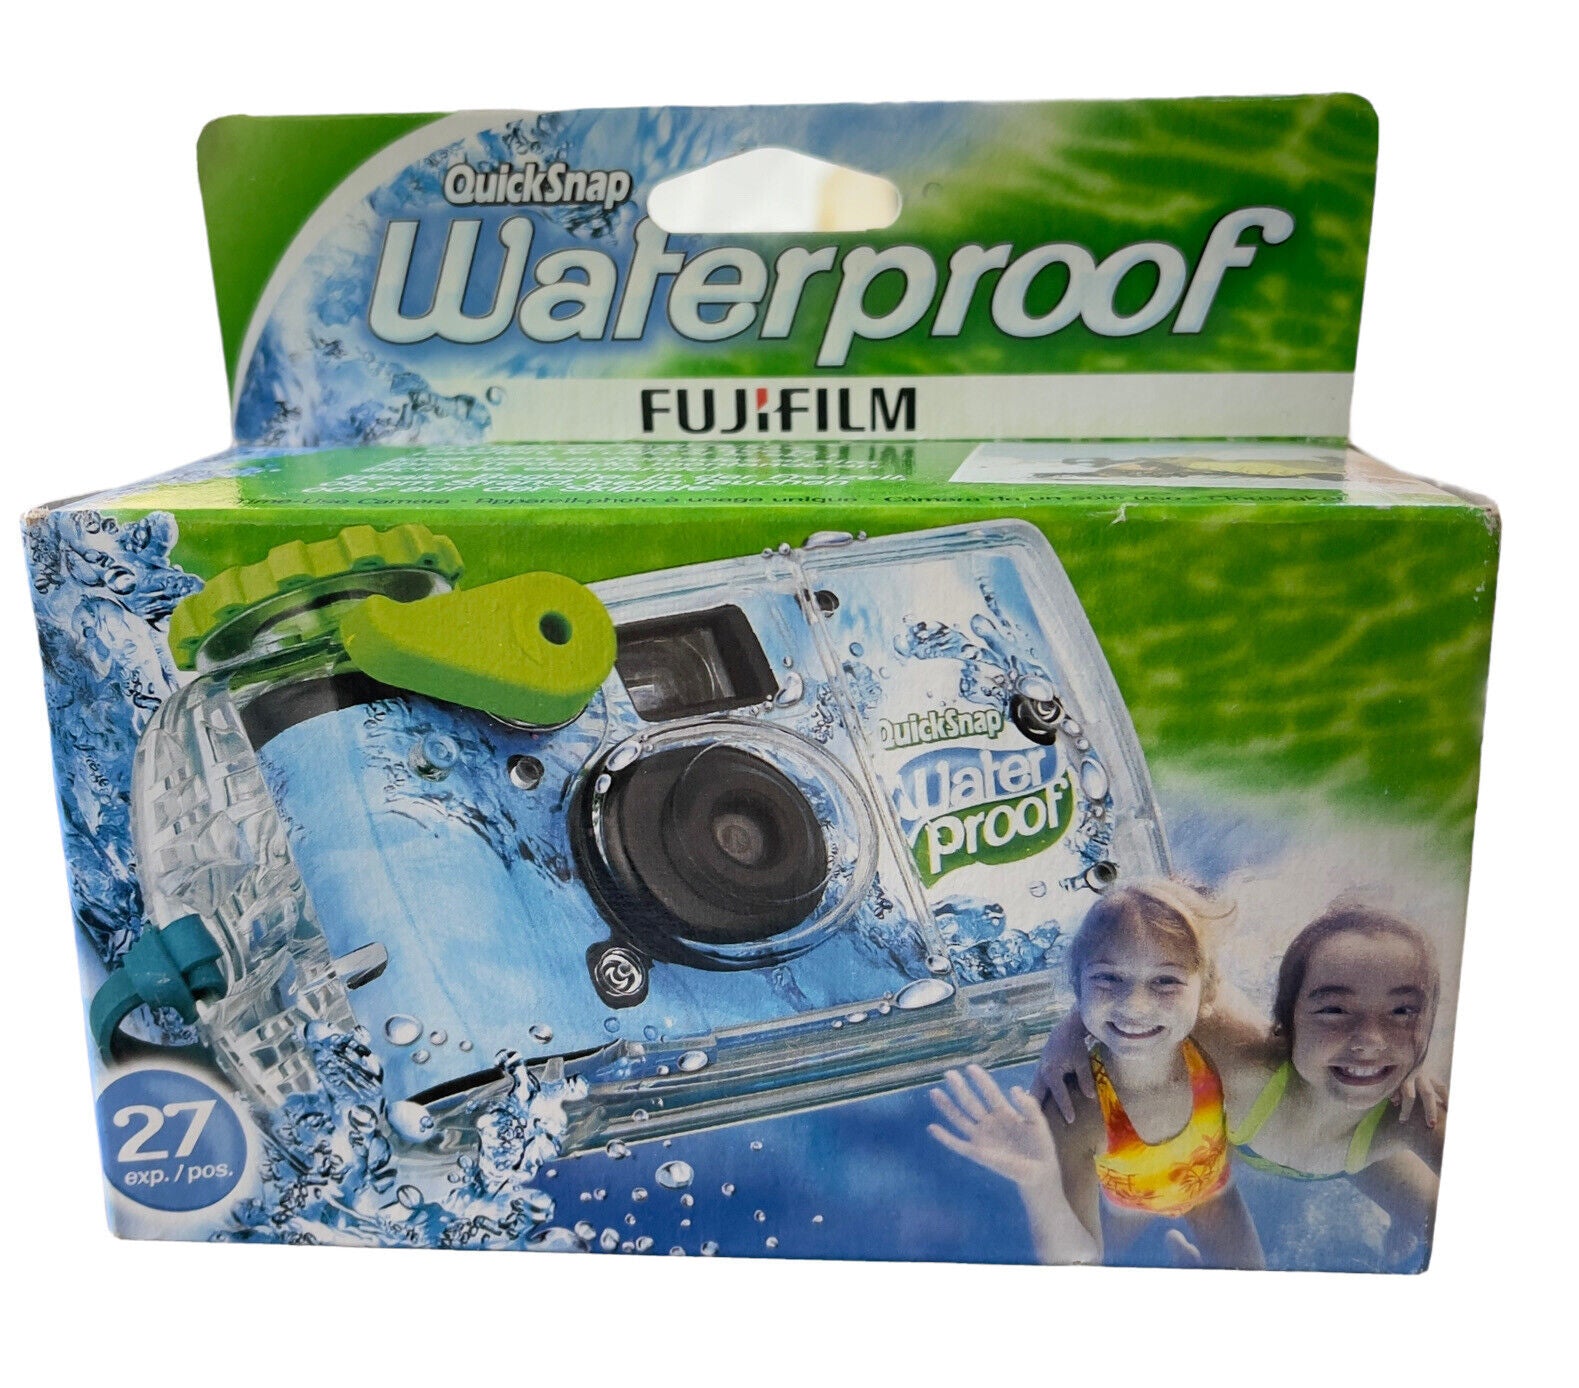 Fujifilm Quick Snap Waterproof Disposable Camera w/ 27 Exposures - Exp 11/23